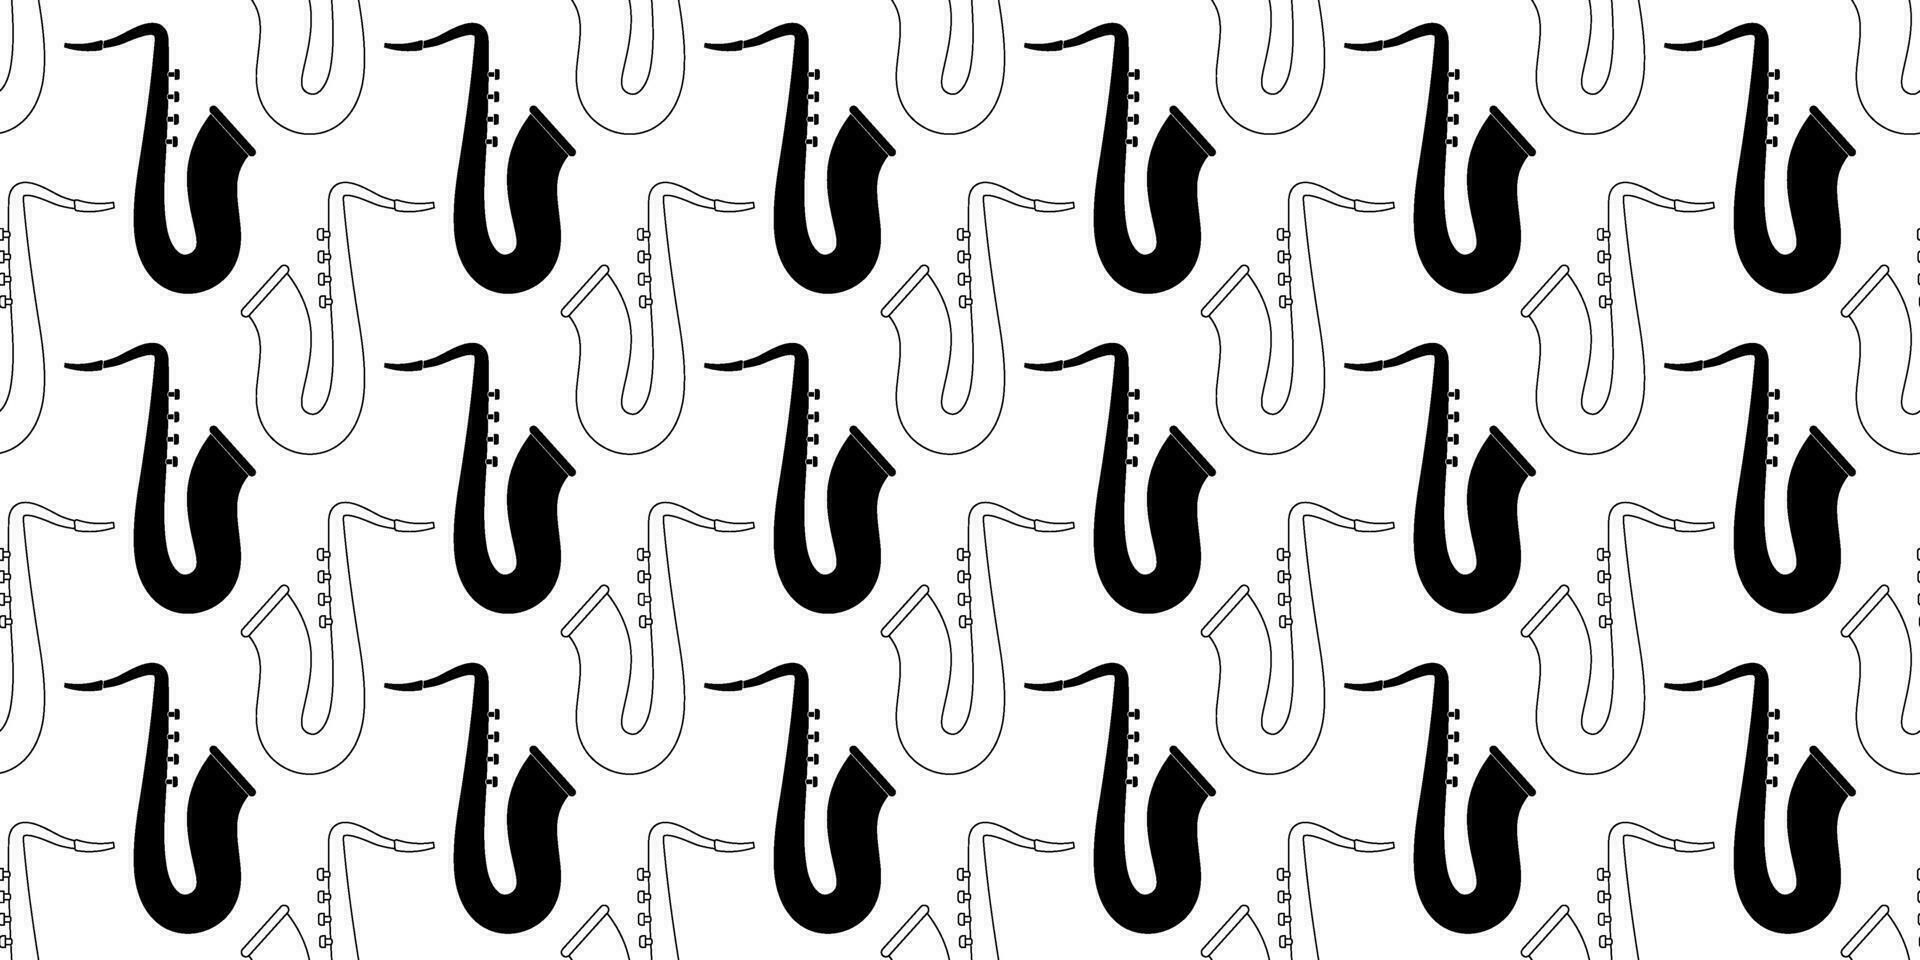 zwart wit saxofoon naadloos patroon vector